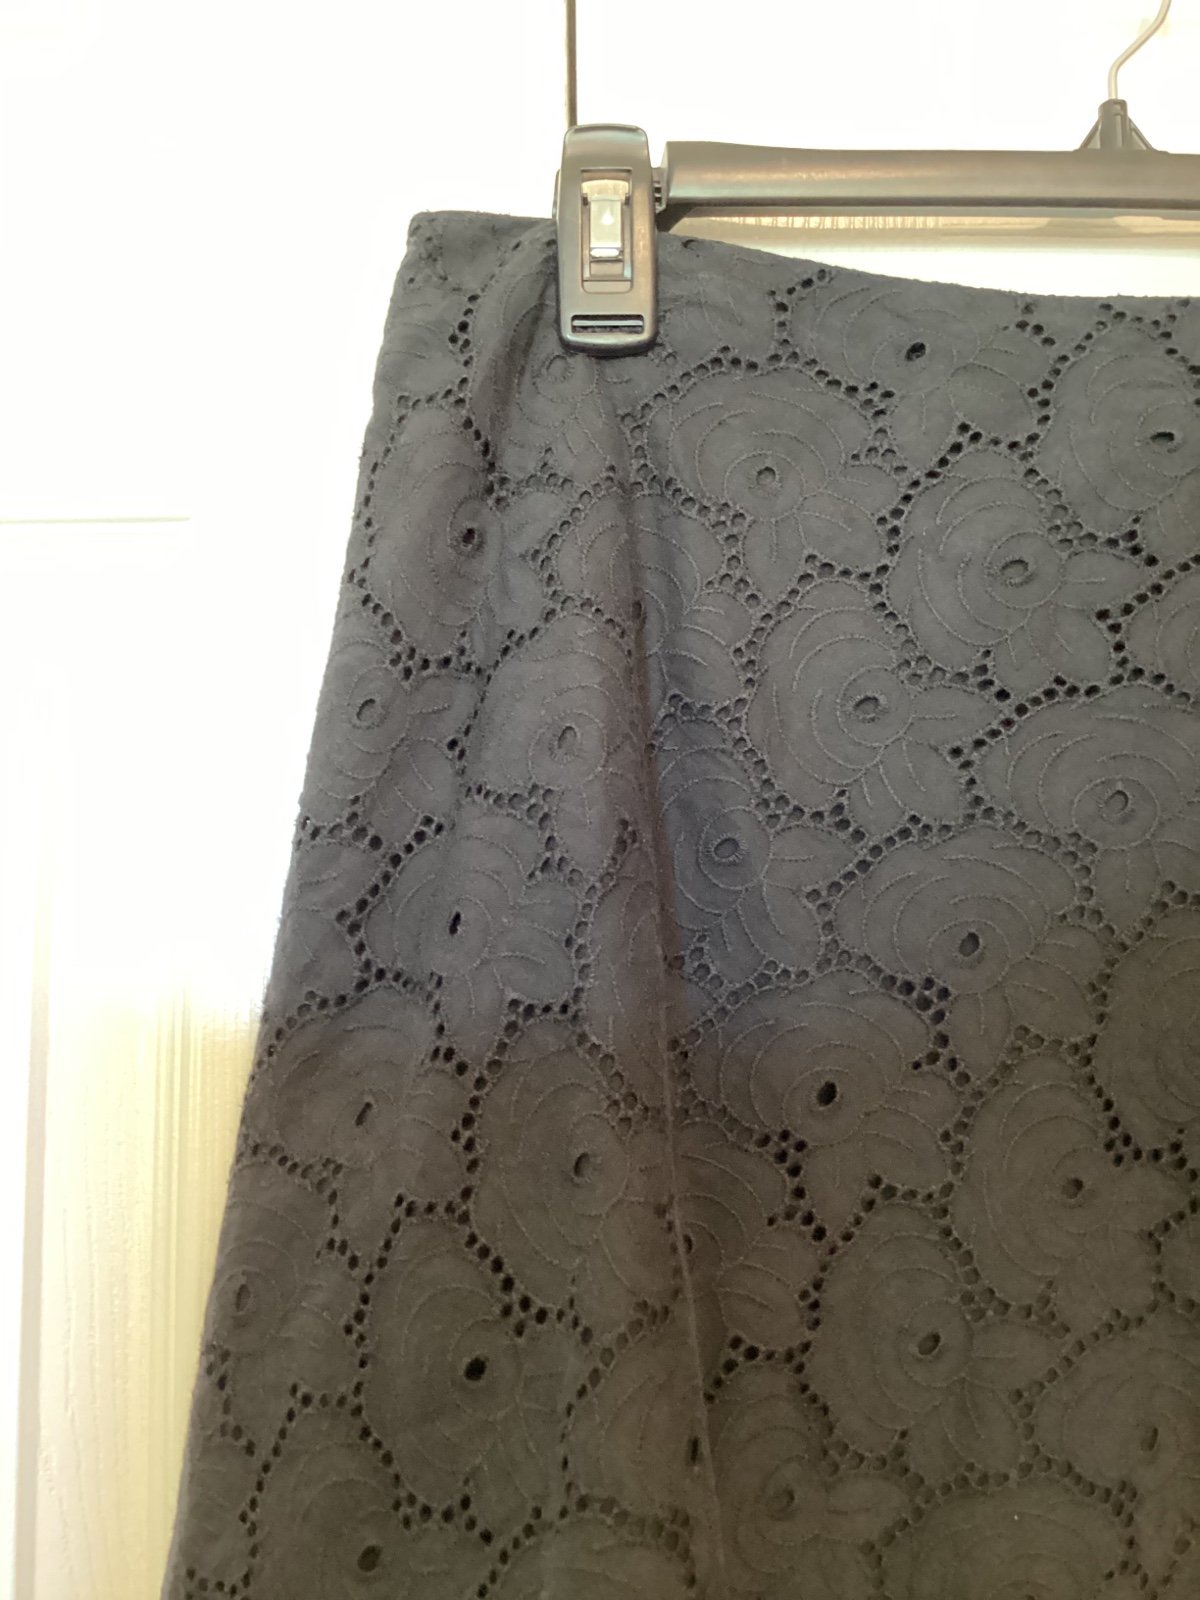 Elegant Autograph New York Size 8 Black Rose Patterned Skirt MU805uONk Cheap